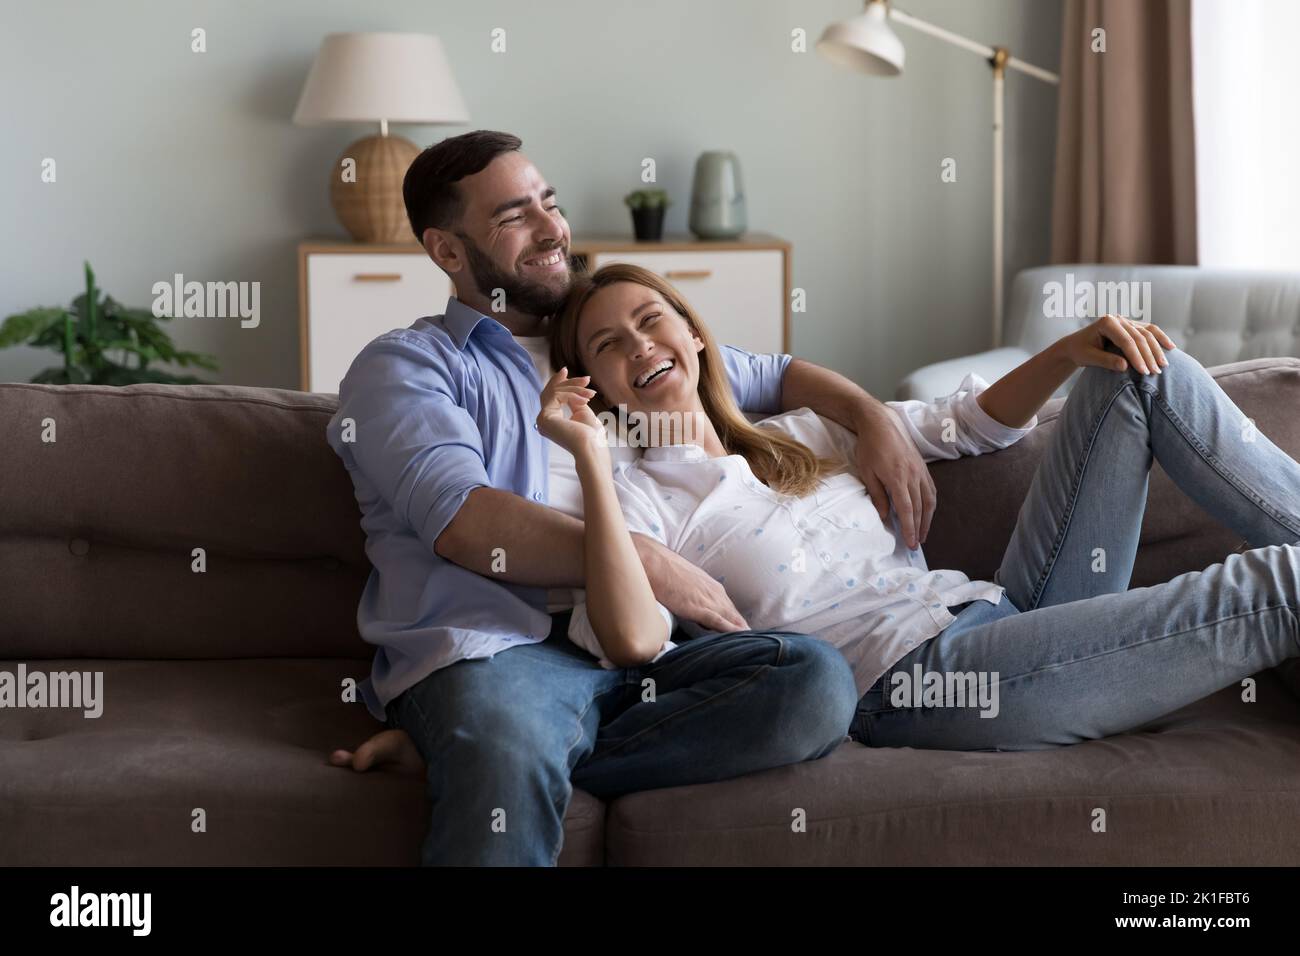 Cheerful dreamy married couple enjoying leisure on sofa Stock Photo